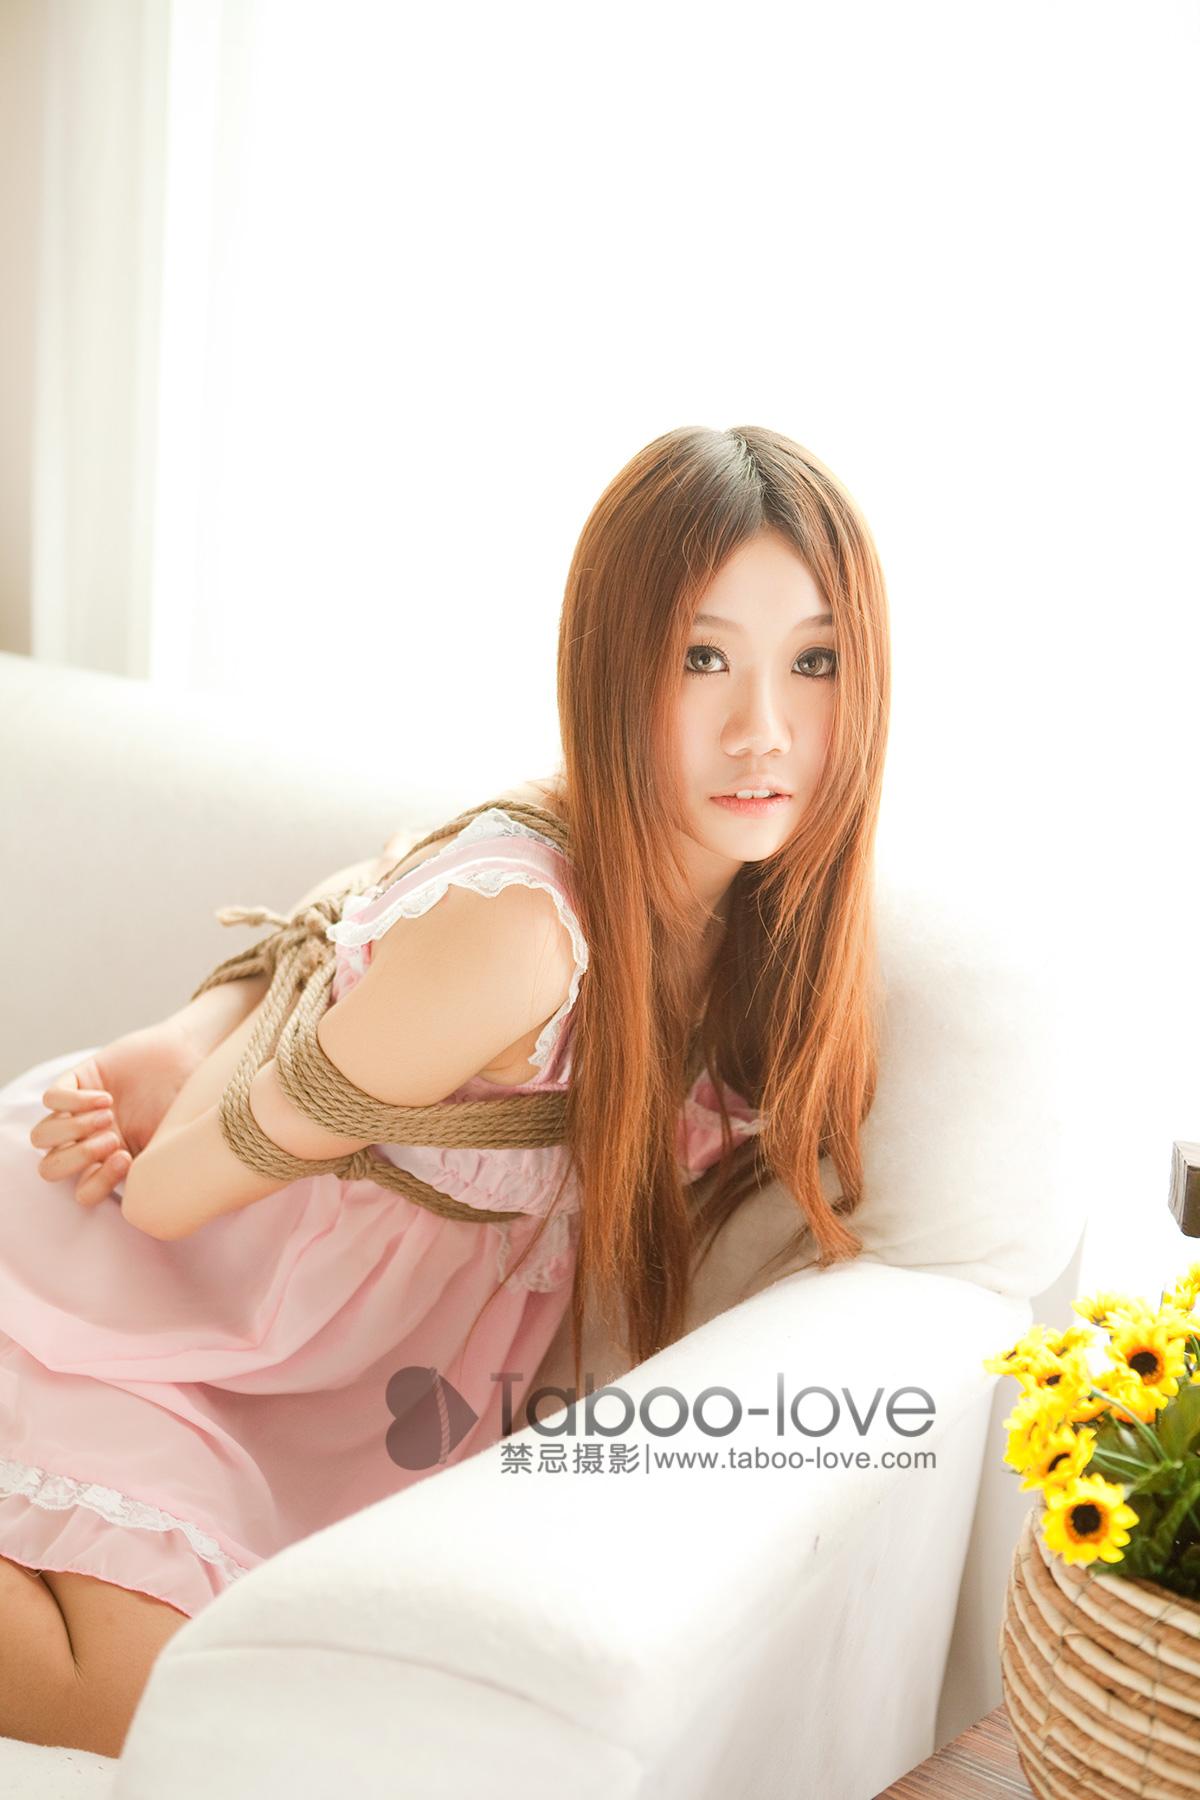 Taboo-love NO.081 Cici 暖洋洋的粉色纯美 禁忌攝影繩藝 - 1.jpg